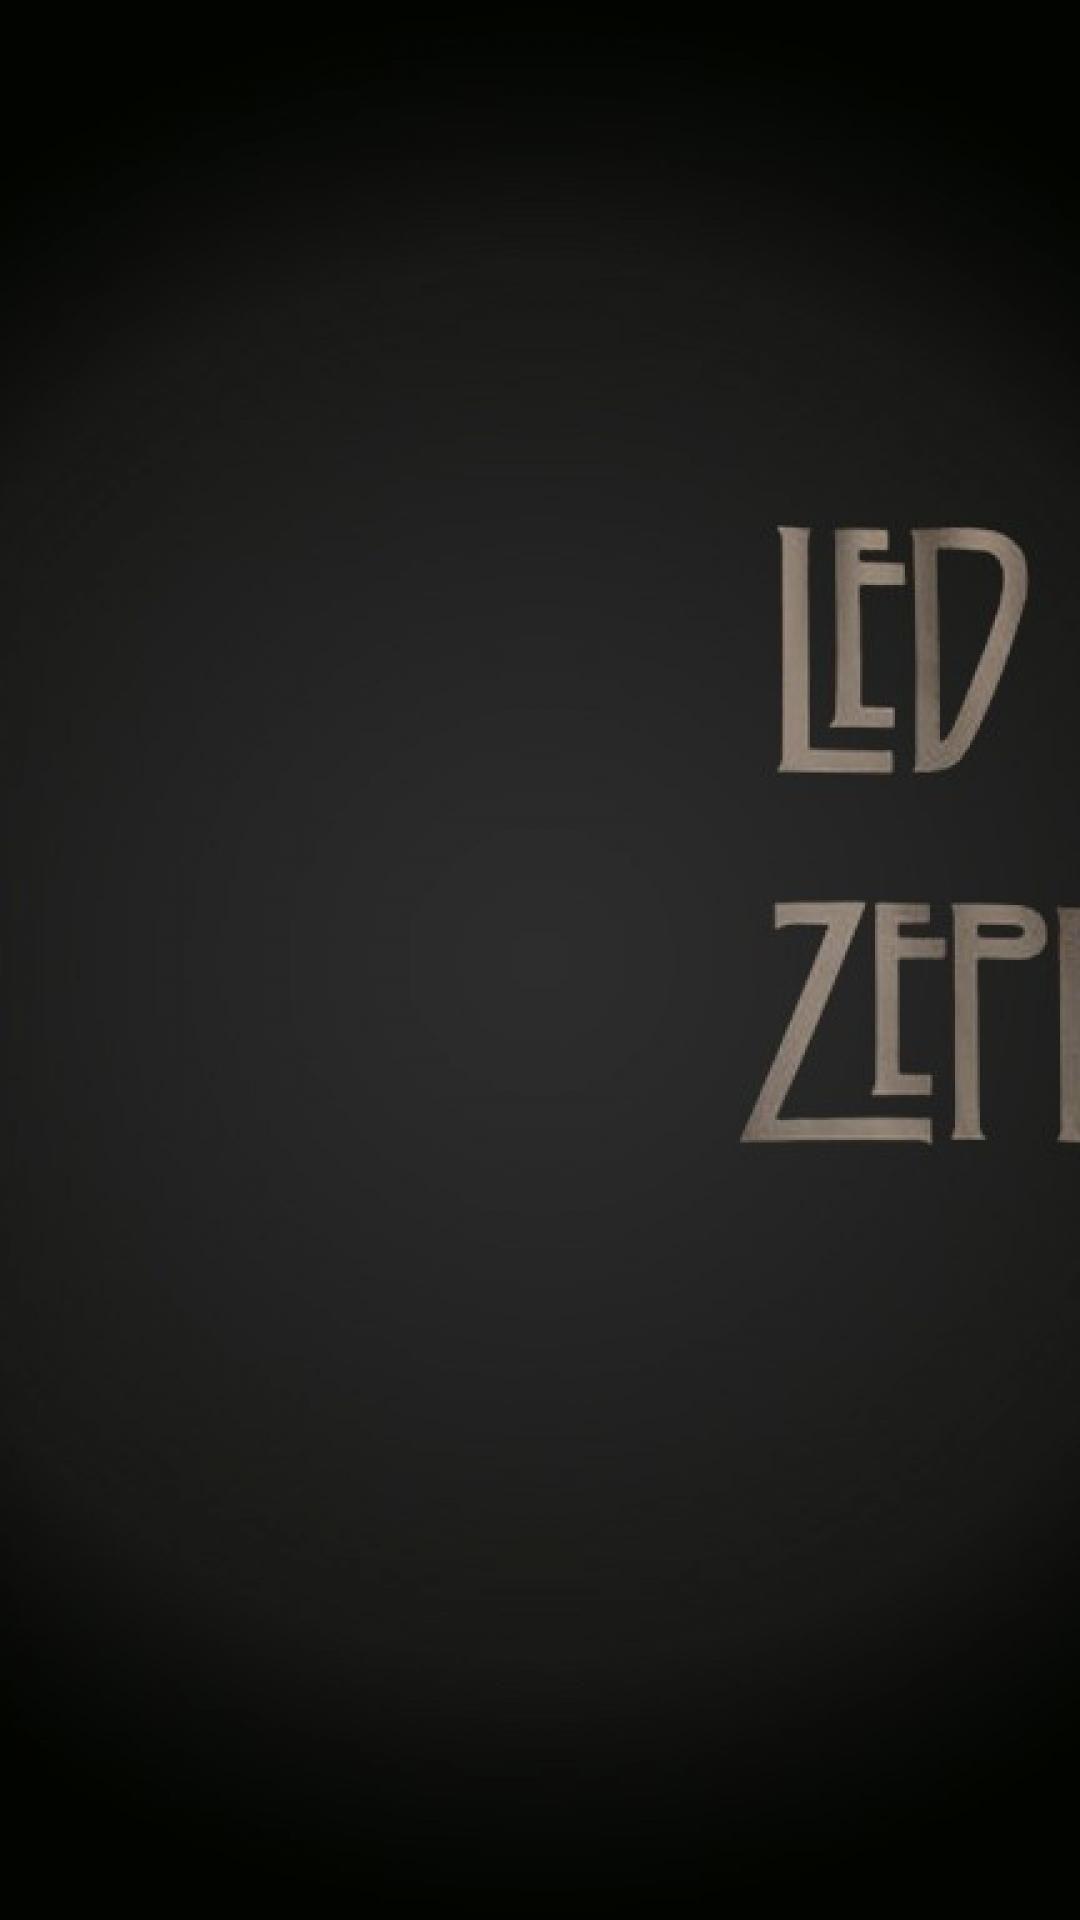  Led  Zeppelin Mobile  Wallpapers  Wallpaper  Cave